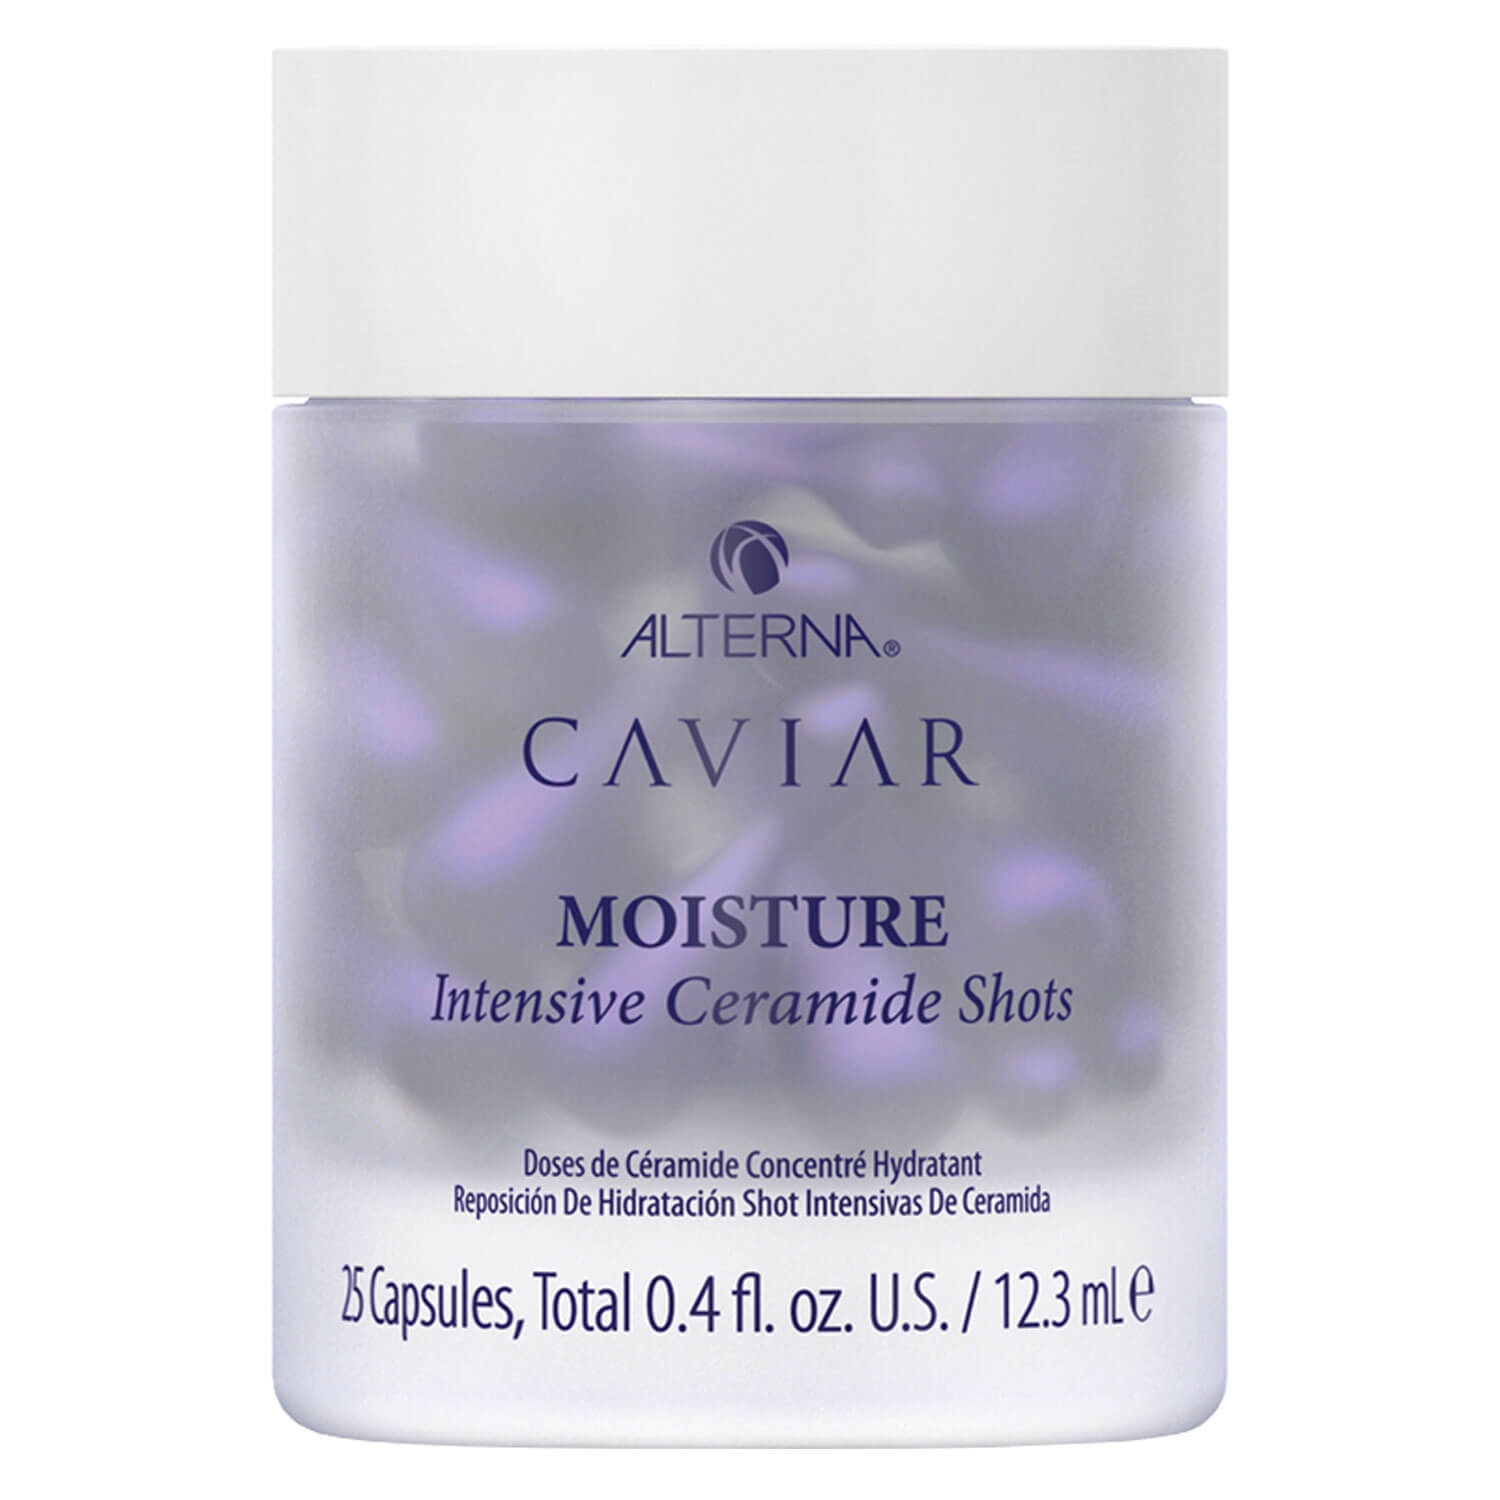 Produktbild von Caviar Replenishing Moisture Intensive Ceramide Shots